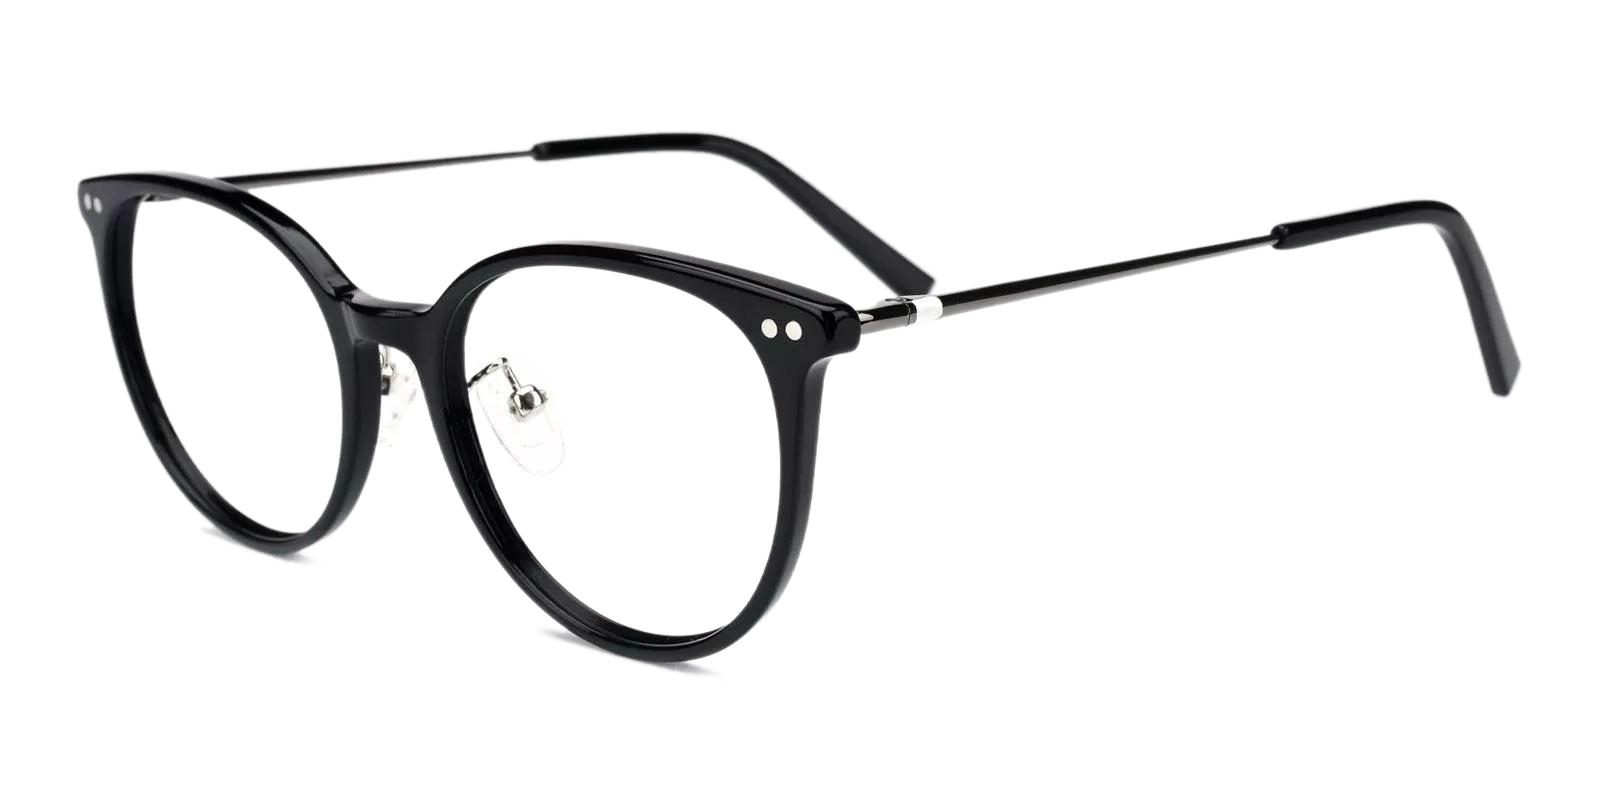 Lenny Black Combination Eyeglasses , Fashion , NosePads Frames from ABBE Glasses